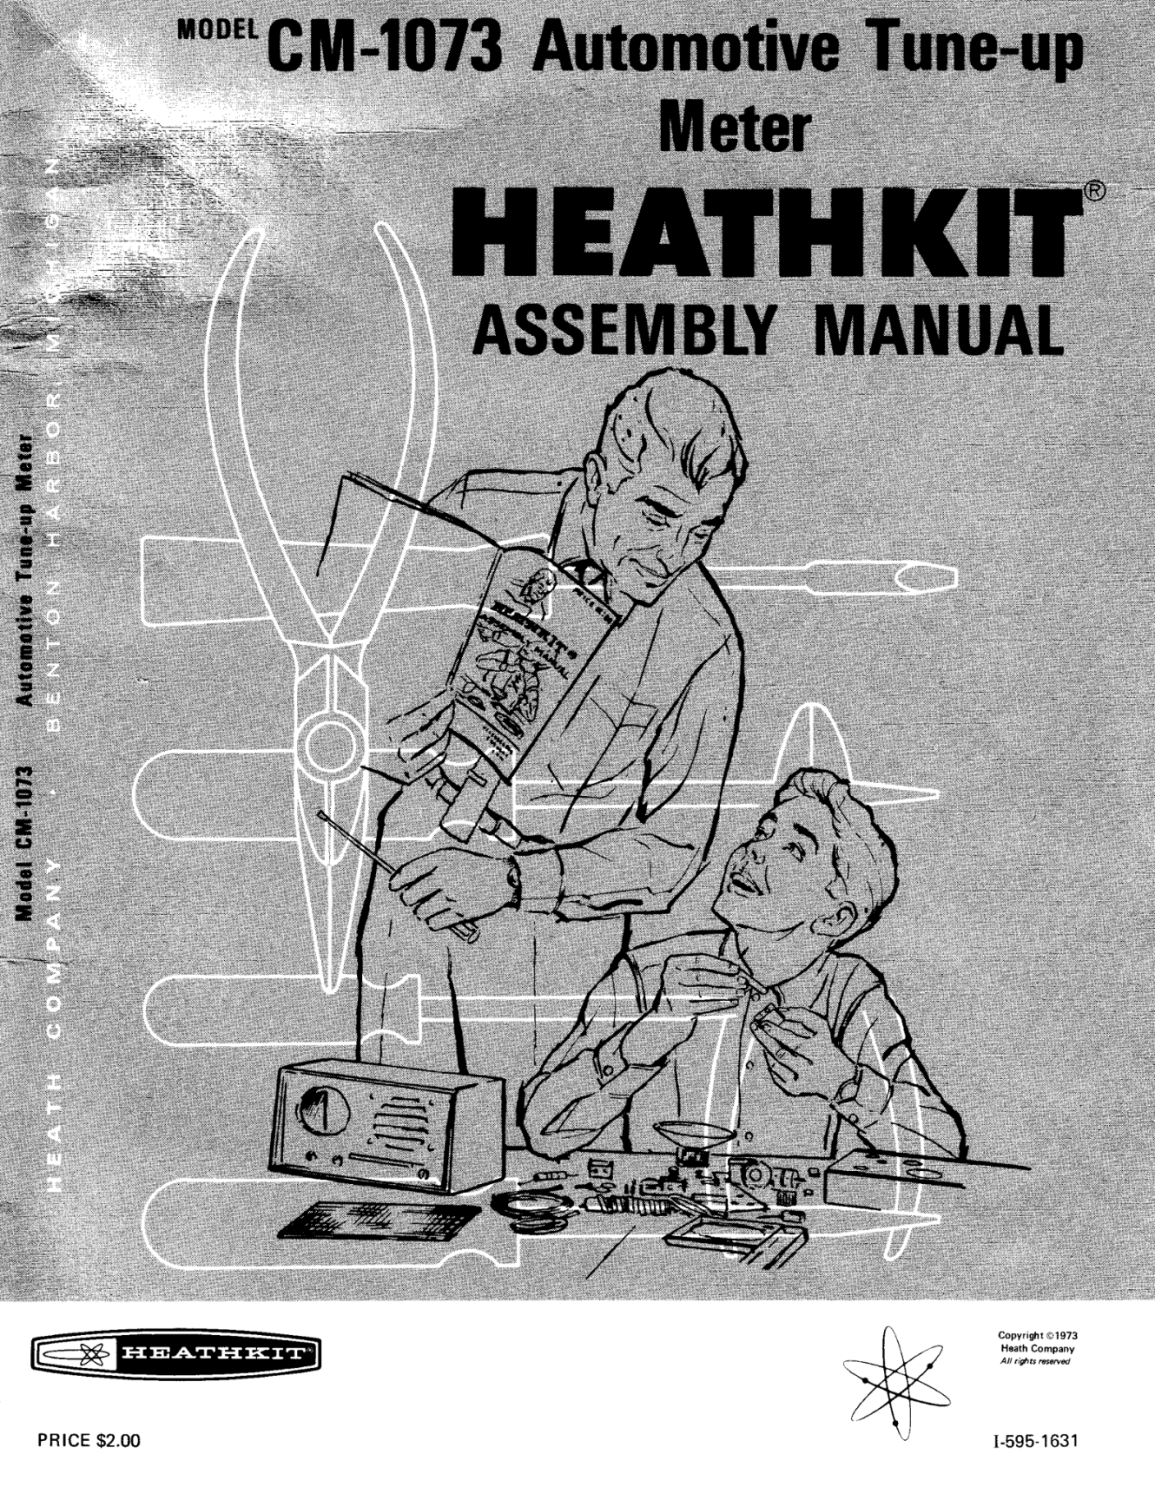 Heathkit CM-1073 Automotive Tune-Up Meter - Assembly Manual